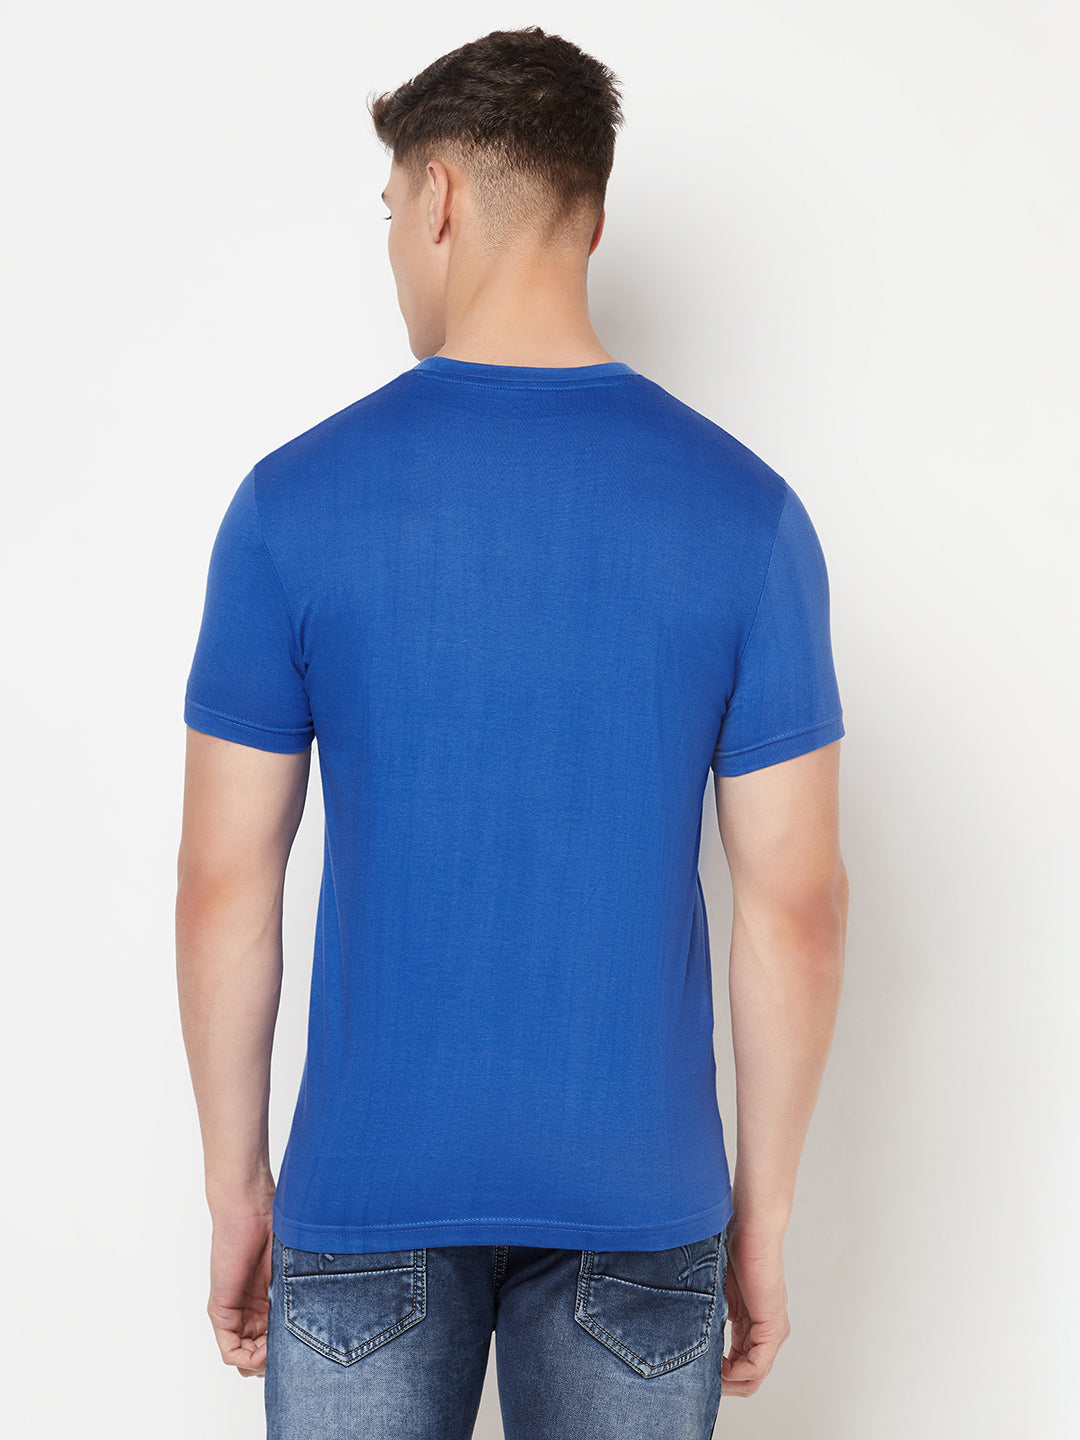 Men's Premium Cotton Tshirts (Pack of 3- Black, Grey, Blue) - NITLON * TRUEREVO